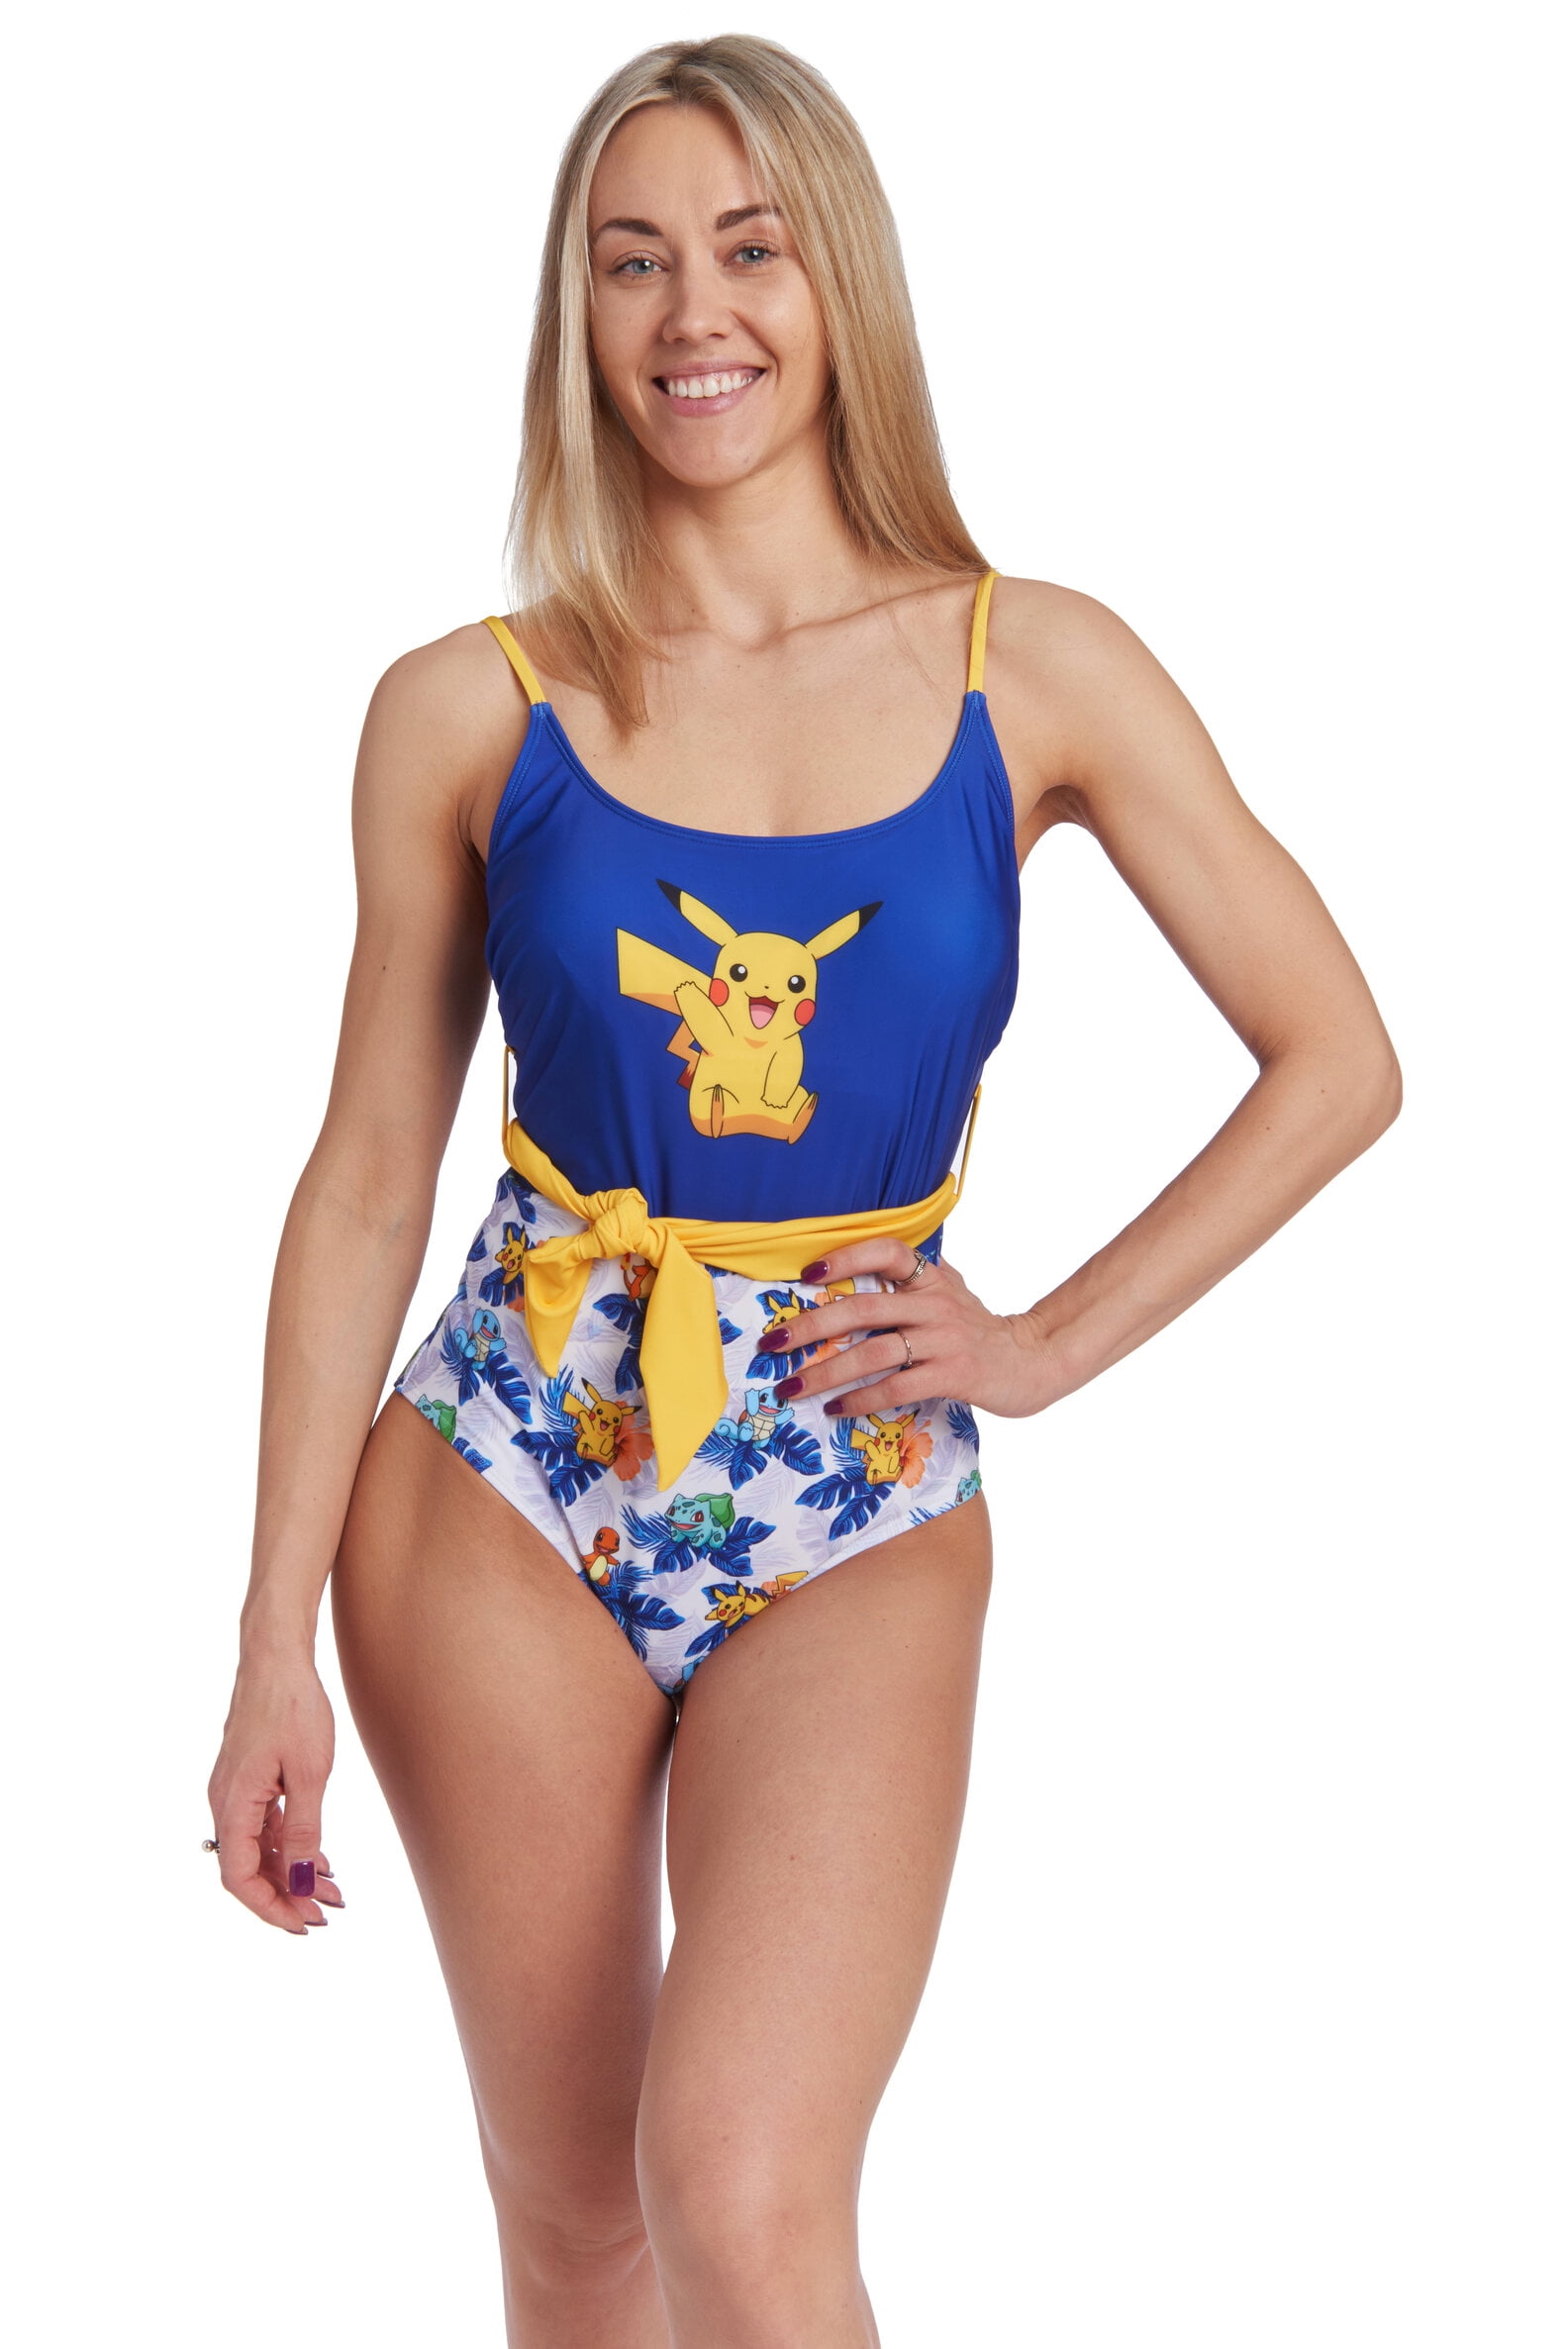 Costume Pokemon Pikachu da adulto